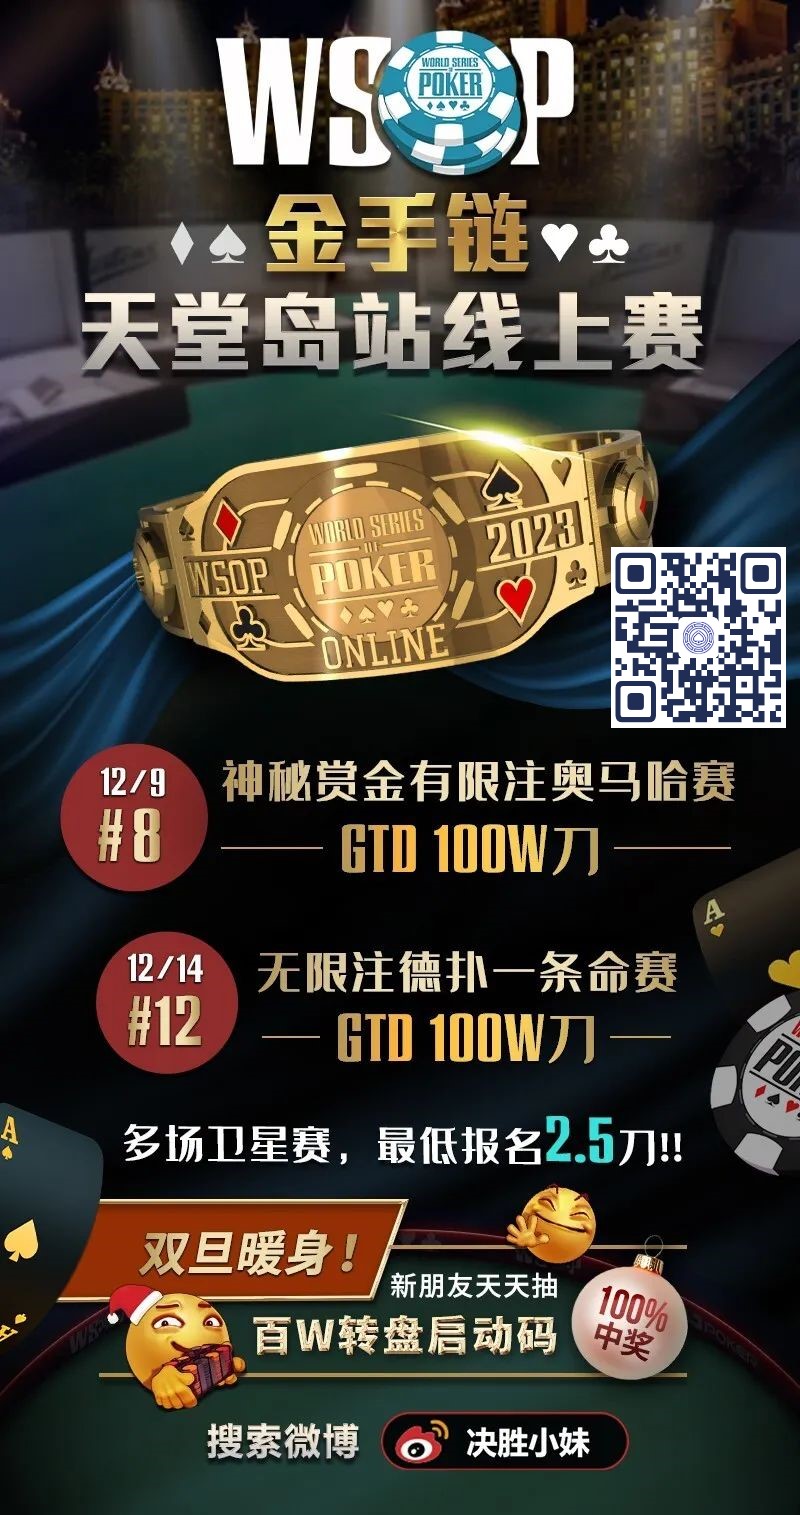 【EV 扑克】APT 河内丨姚亚迪排名 Day2 第二 ，主赛事成越南史上最大扑克赛事